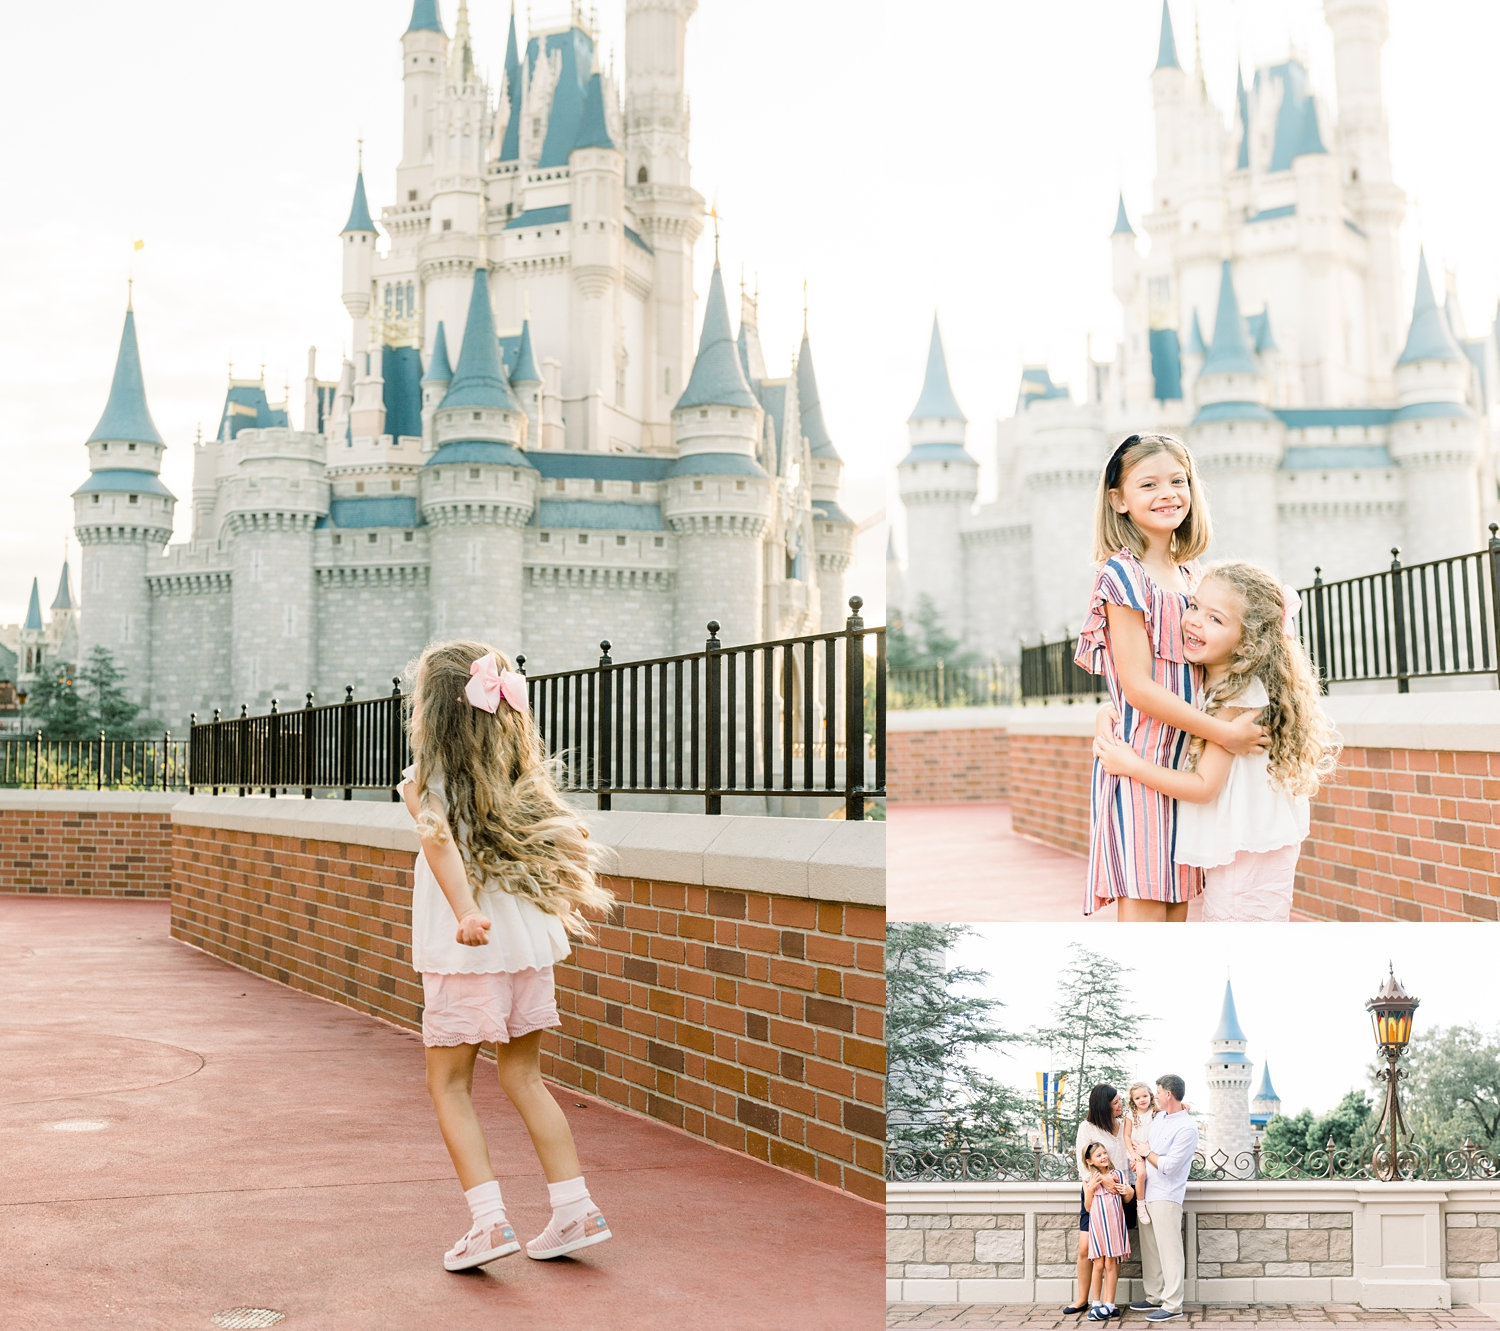 Fantasyland photo collage, Magic Kingdom, Walt Disney World, Ryaphotos